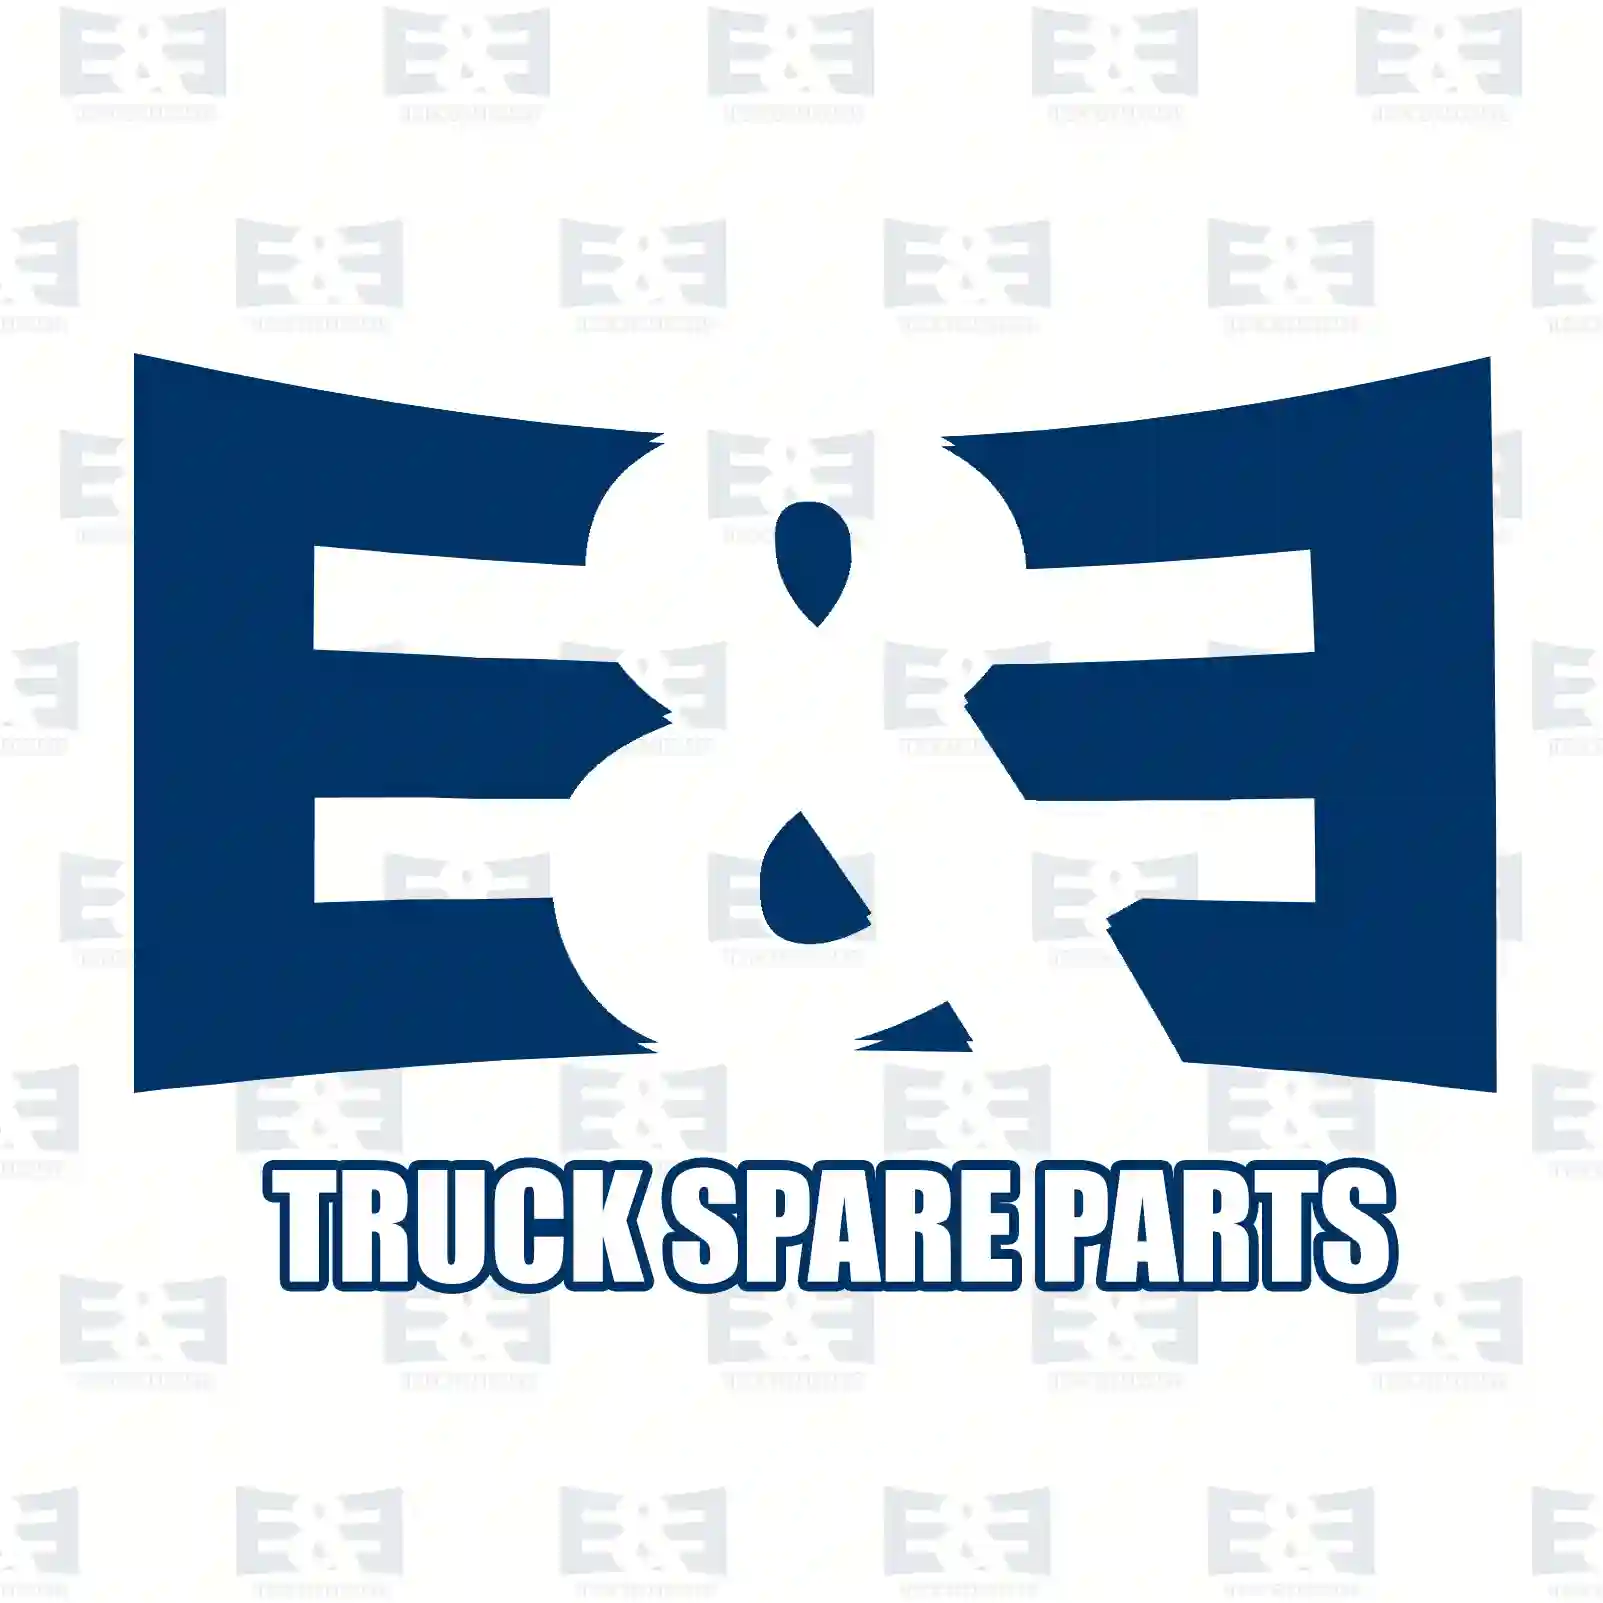 Multiribbed belt, 2E2285486, 6453TT, 6453XY, 504048243, 504087247, 5040087247, 504048243, 504087247, 5040087247, 5801419157, 6453TT, 6453XY, ZG01651-0008 ||  2E2285486 E&E Truck Spare Parts | Truck Spare Parts, Auotomotive Spare Parts Multiribbed belt, 2E2285486, 6453TT, 6453XY, 504048243, 504087247, 5040087247, 504048243, 504087247, 5040087247, 5801419157, 6453TT, 6453XY, ZG01651-0008 ||  2E2285486 E&E Truck Spare Parts | Truck Spare Parts, Auotomotive Spare Parts